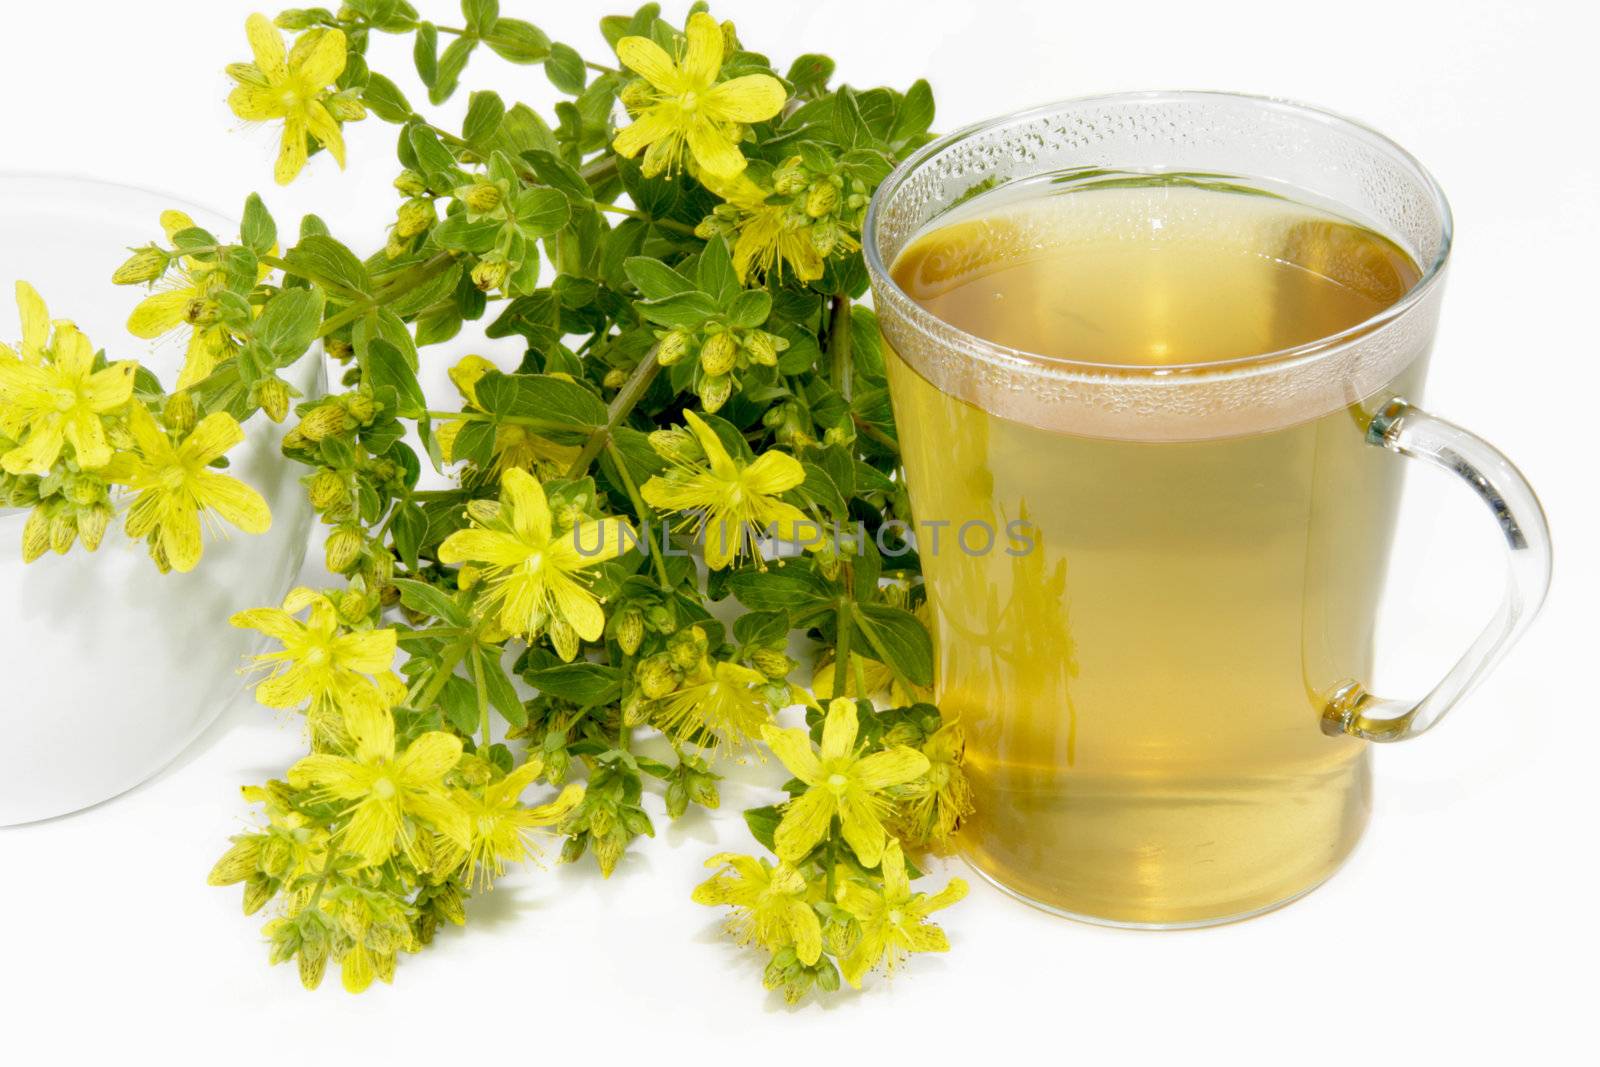 Herbal tea with Saint-John's wort over white background